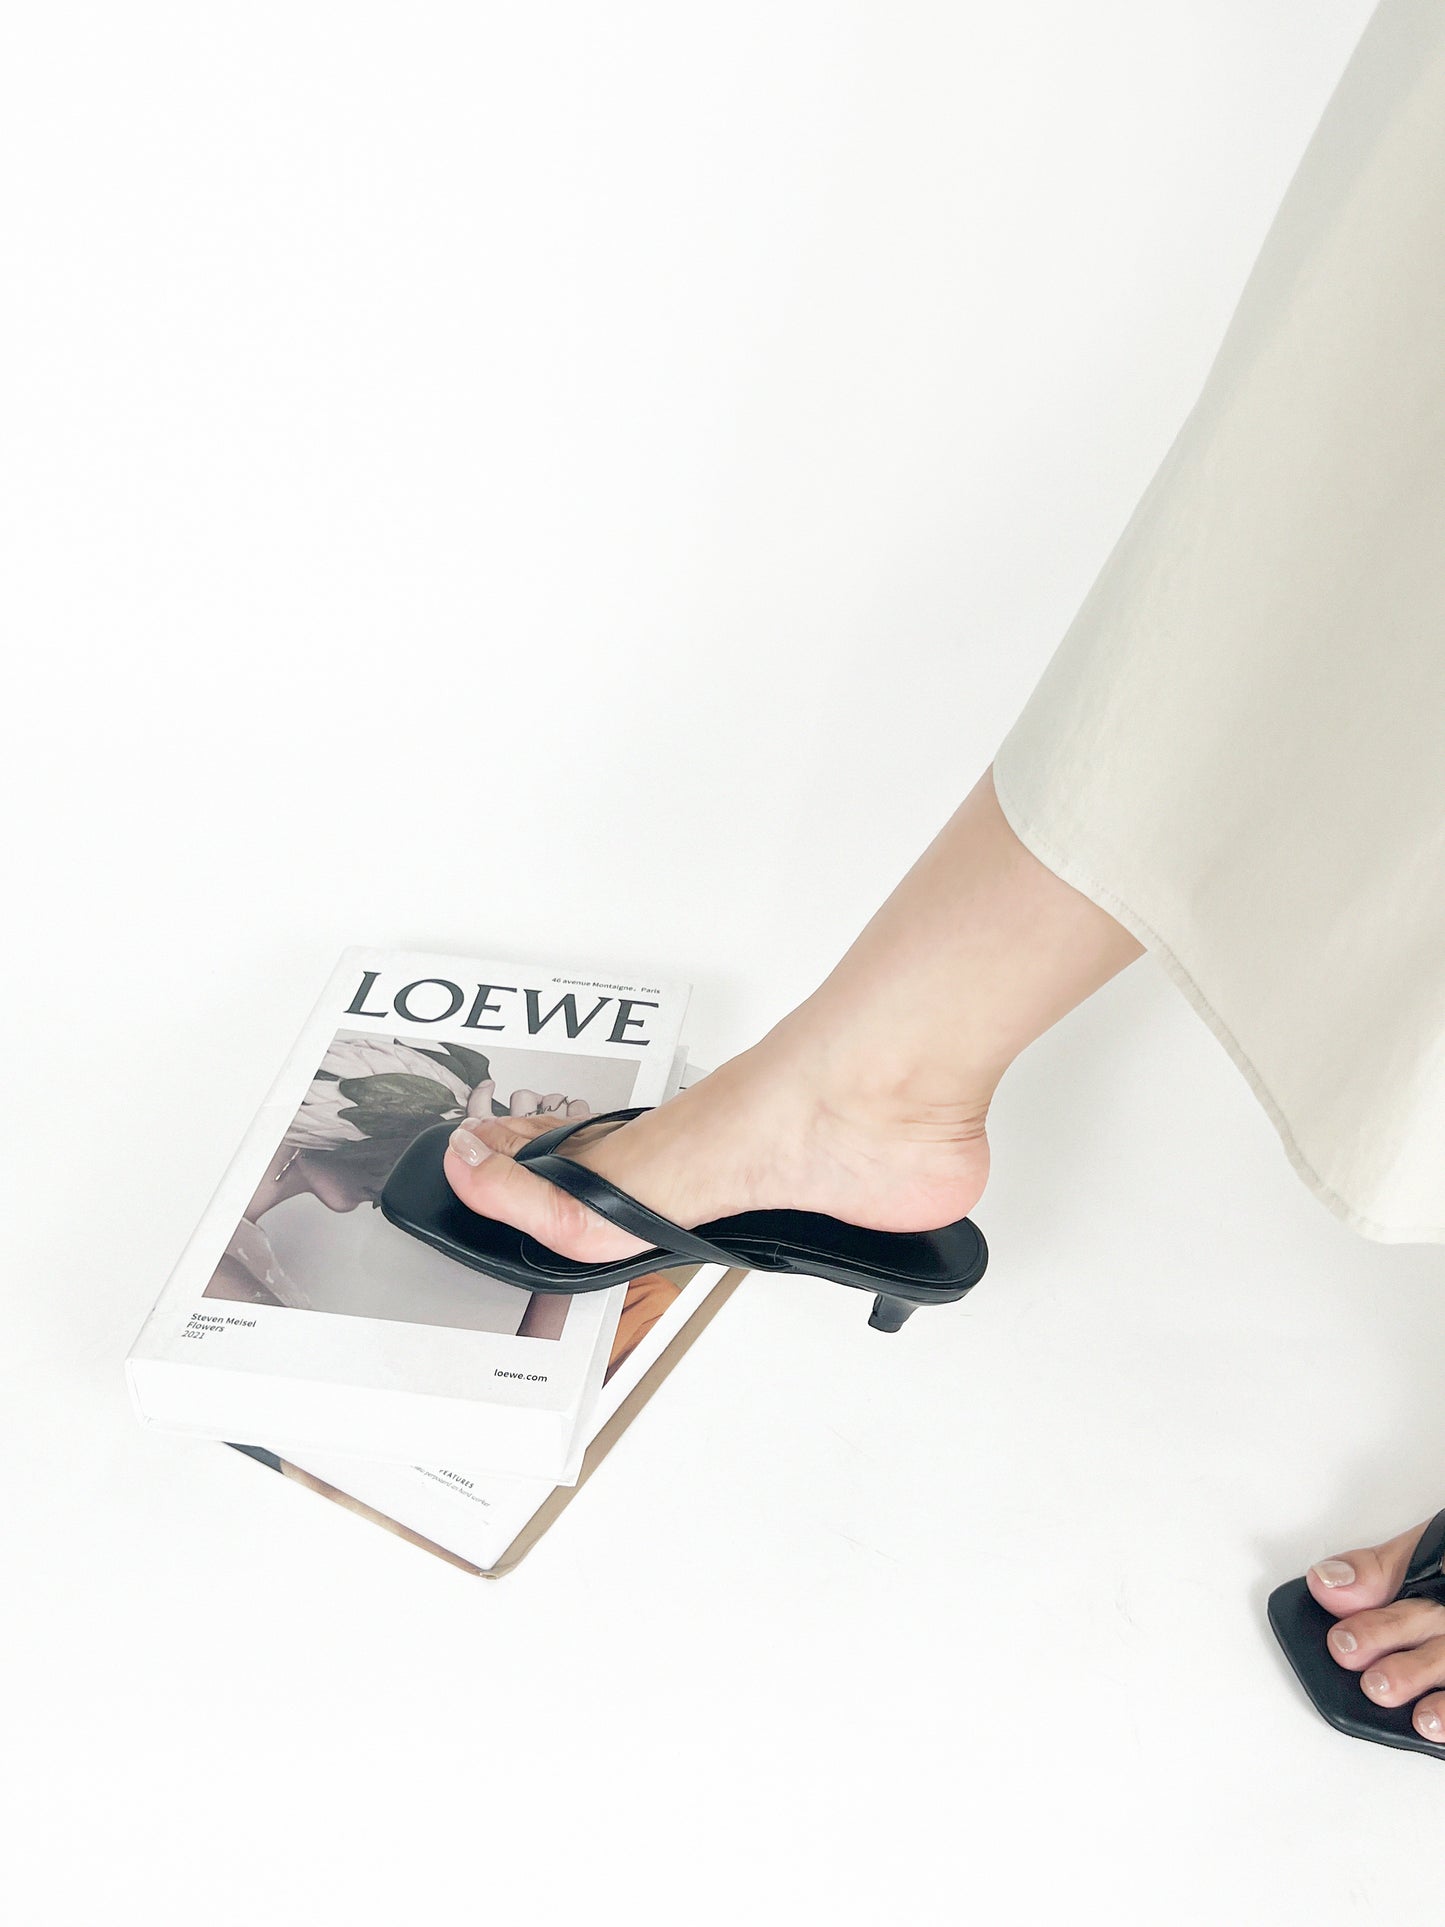 Janelle Low Heel Thong Sandals (Black)